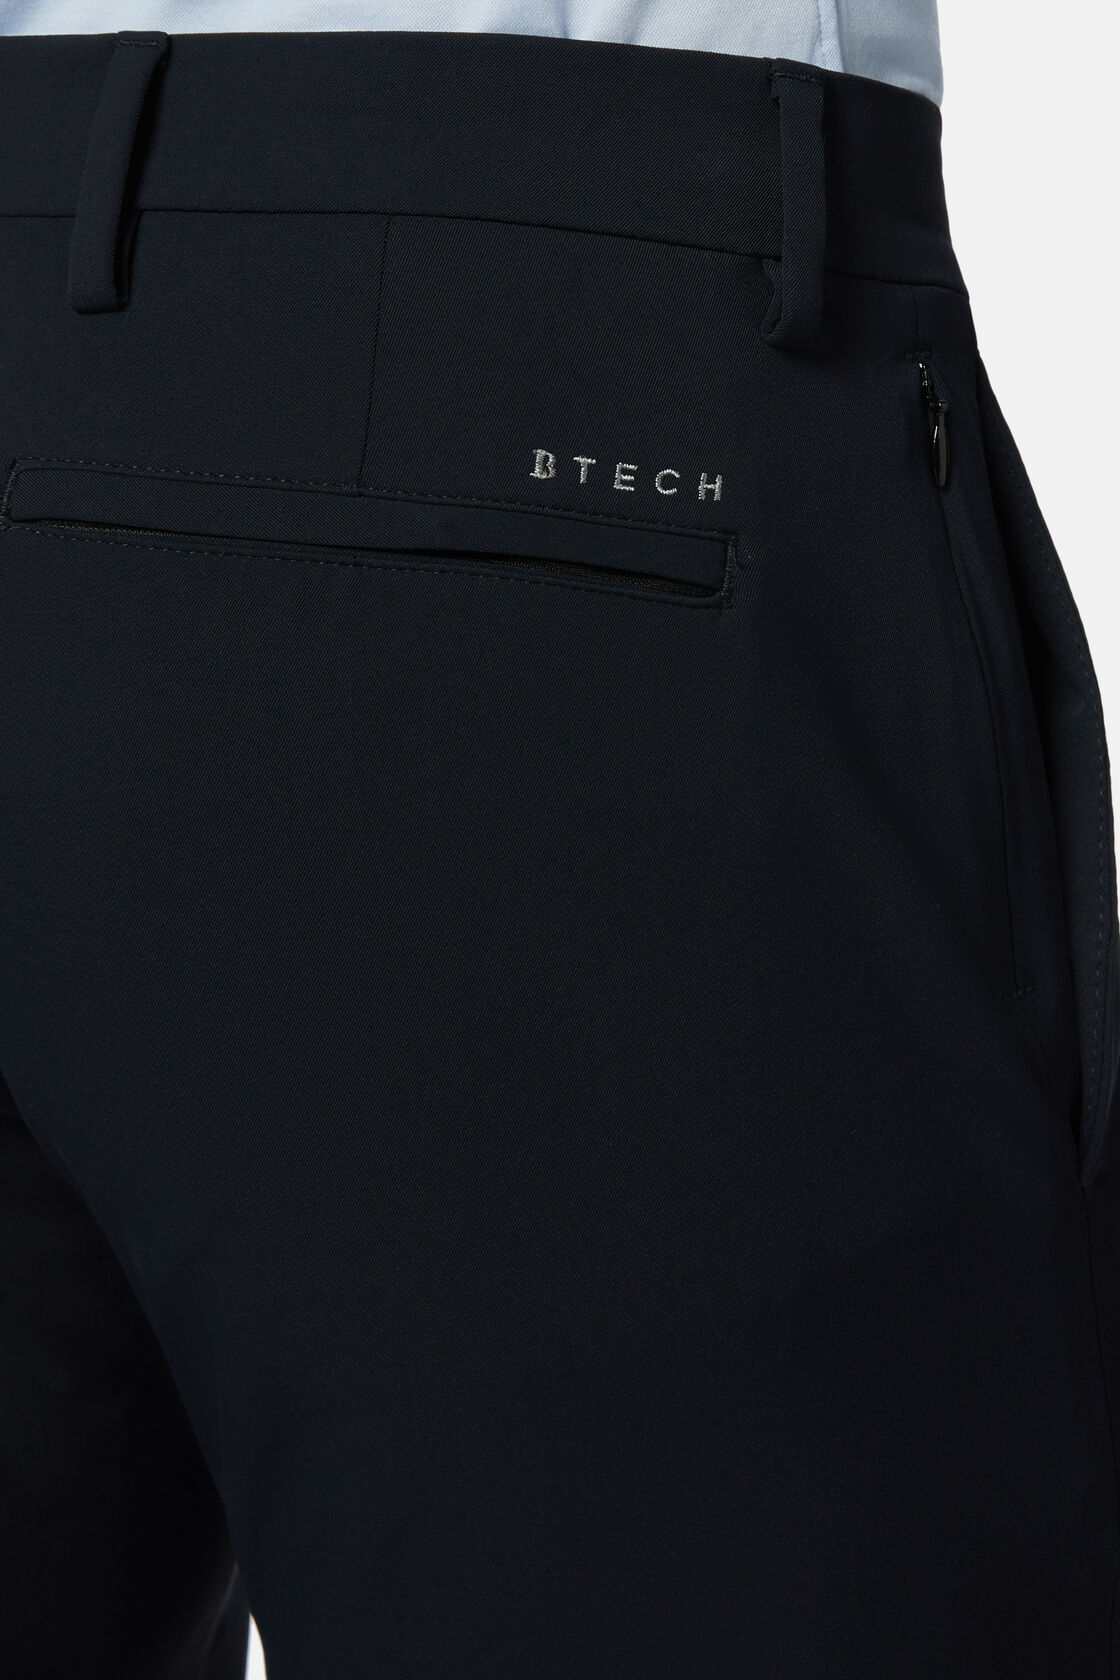 Hose aus B Tech Performance Stretch Nylon, Navy blau, hi-res